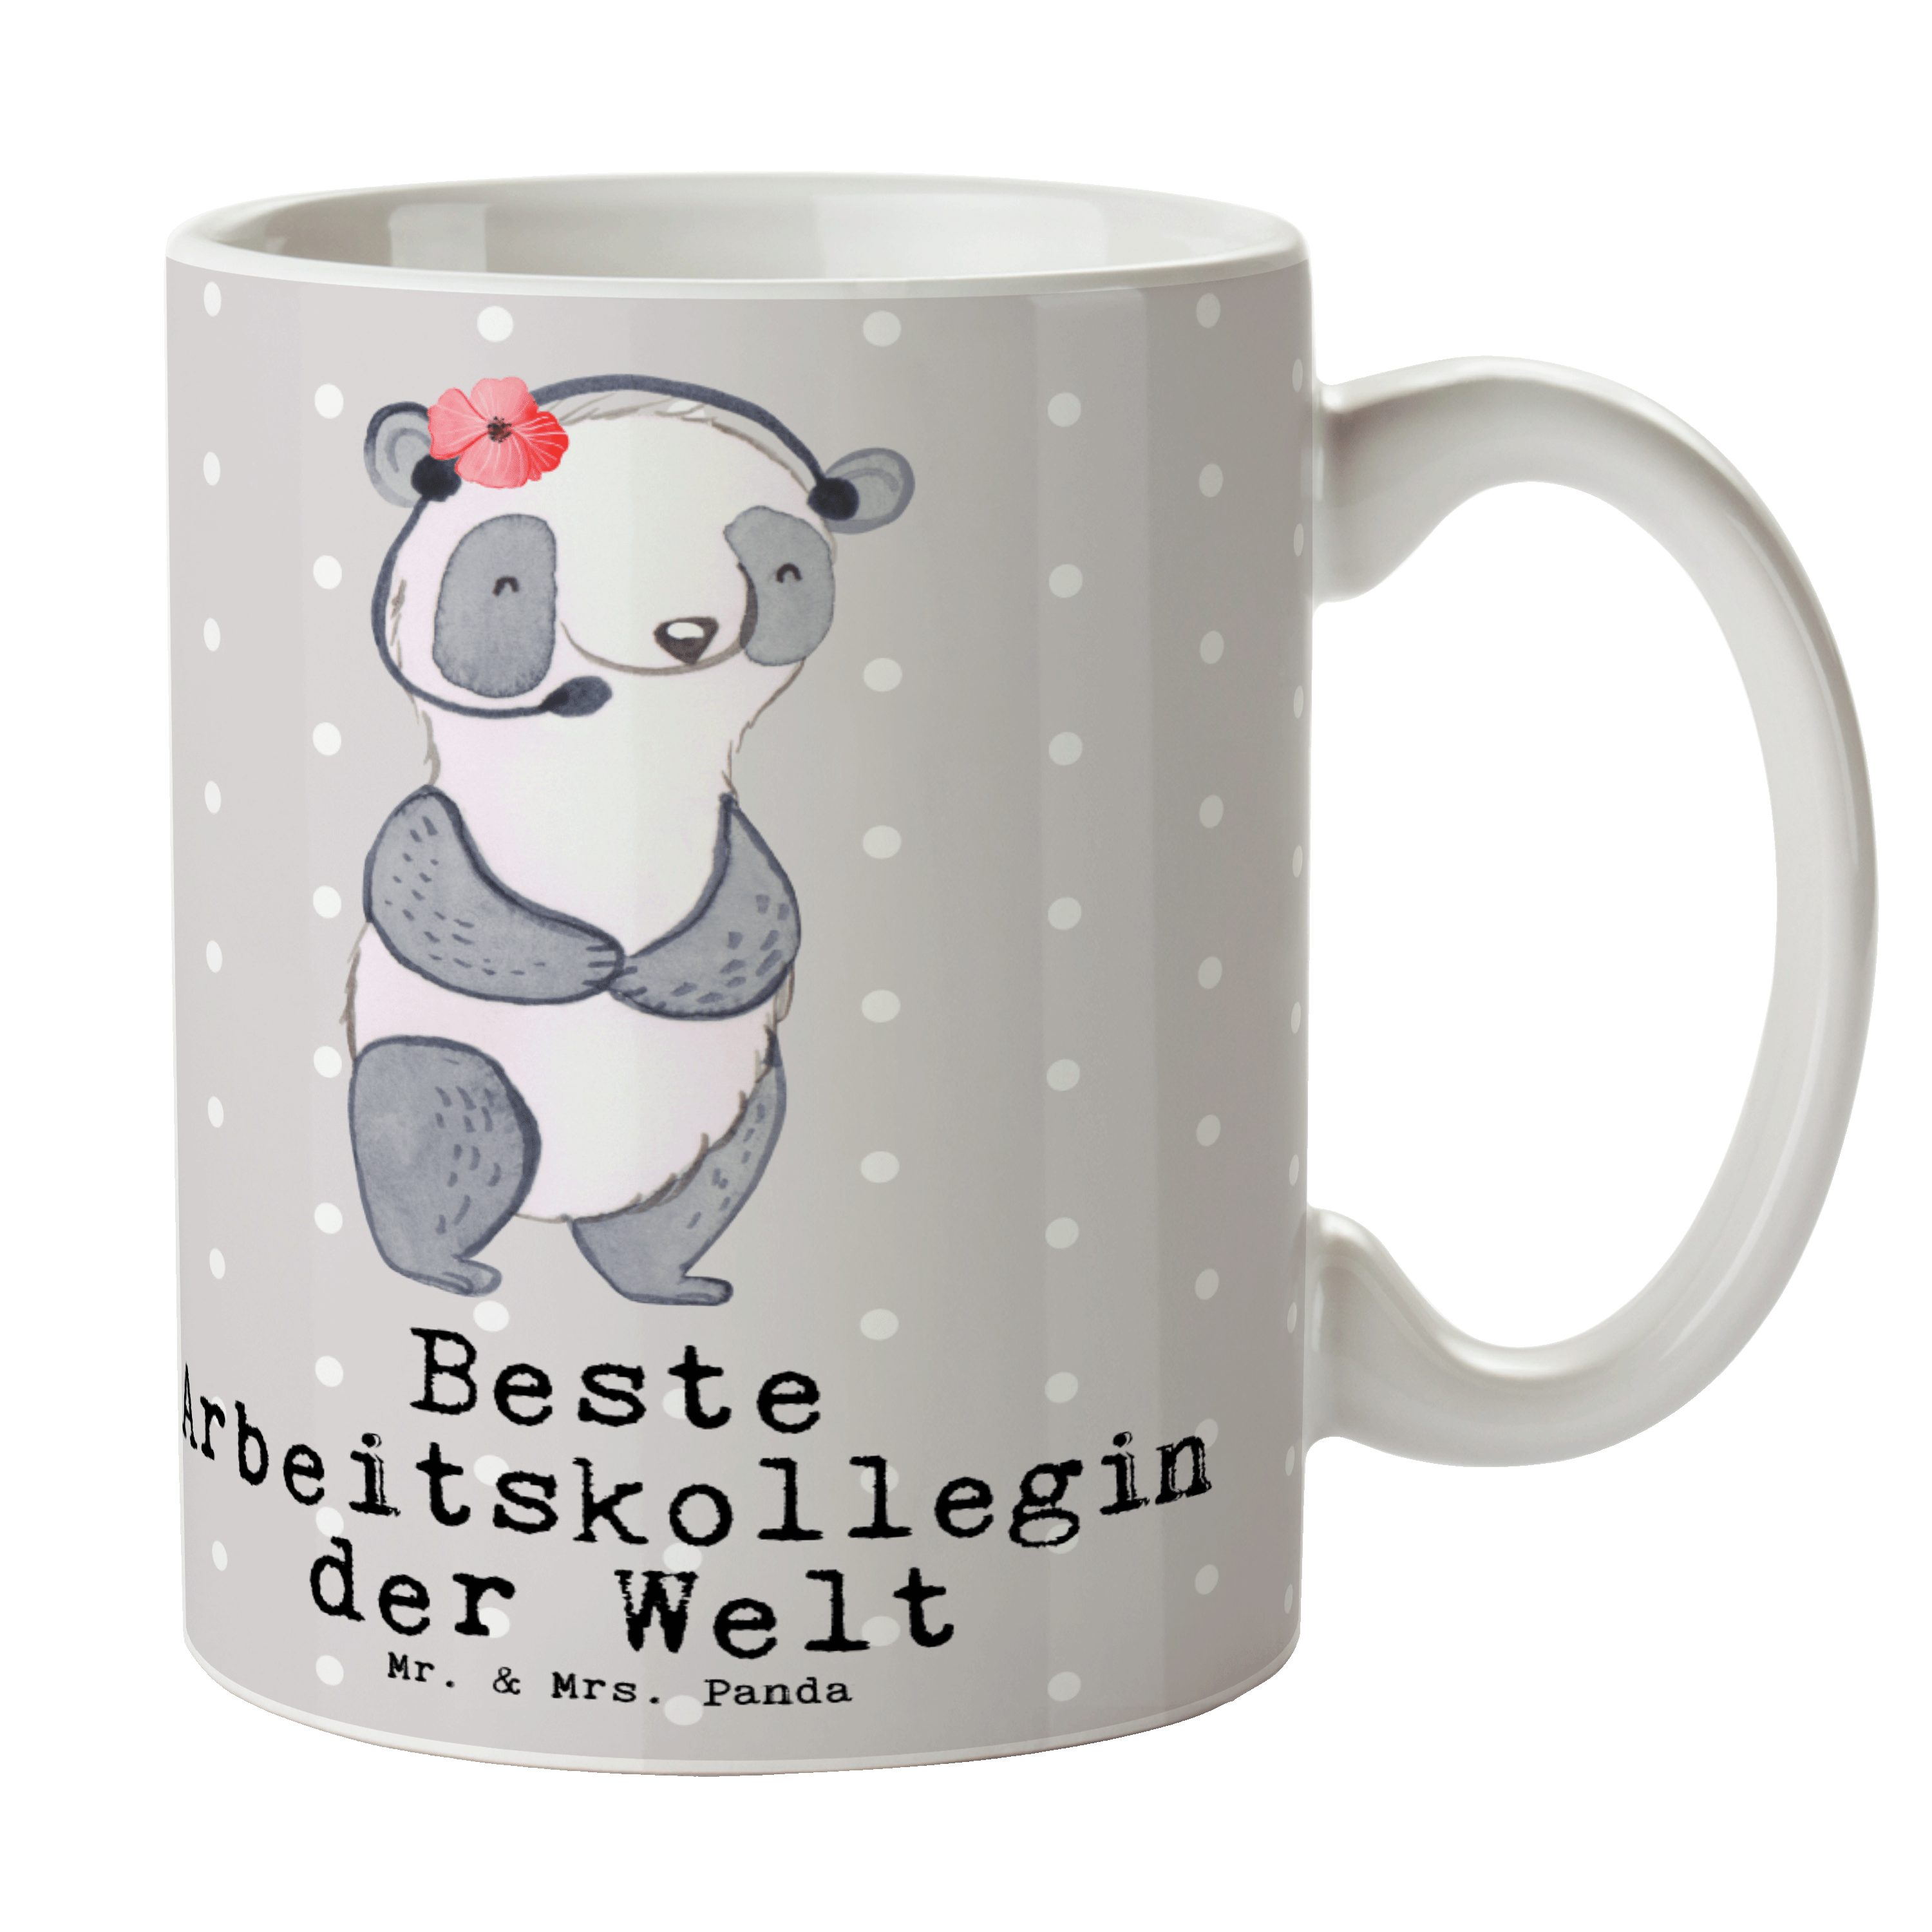 Mr. & Mrs. Panda Tasse Panda Beste Arbeitskollegin der Welt - Grau Pastell - Geschenk, Teeta, Keramik